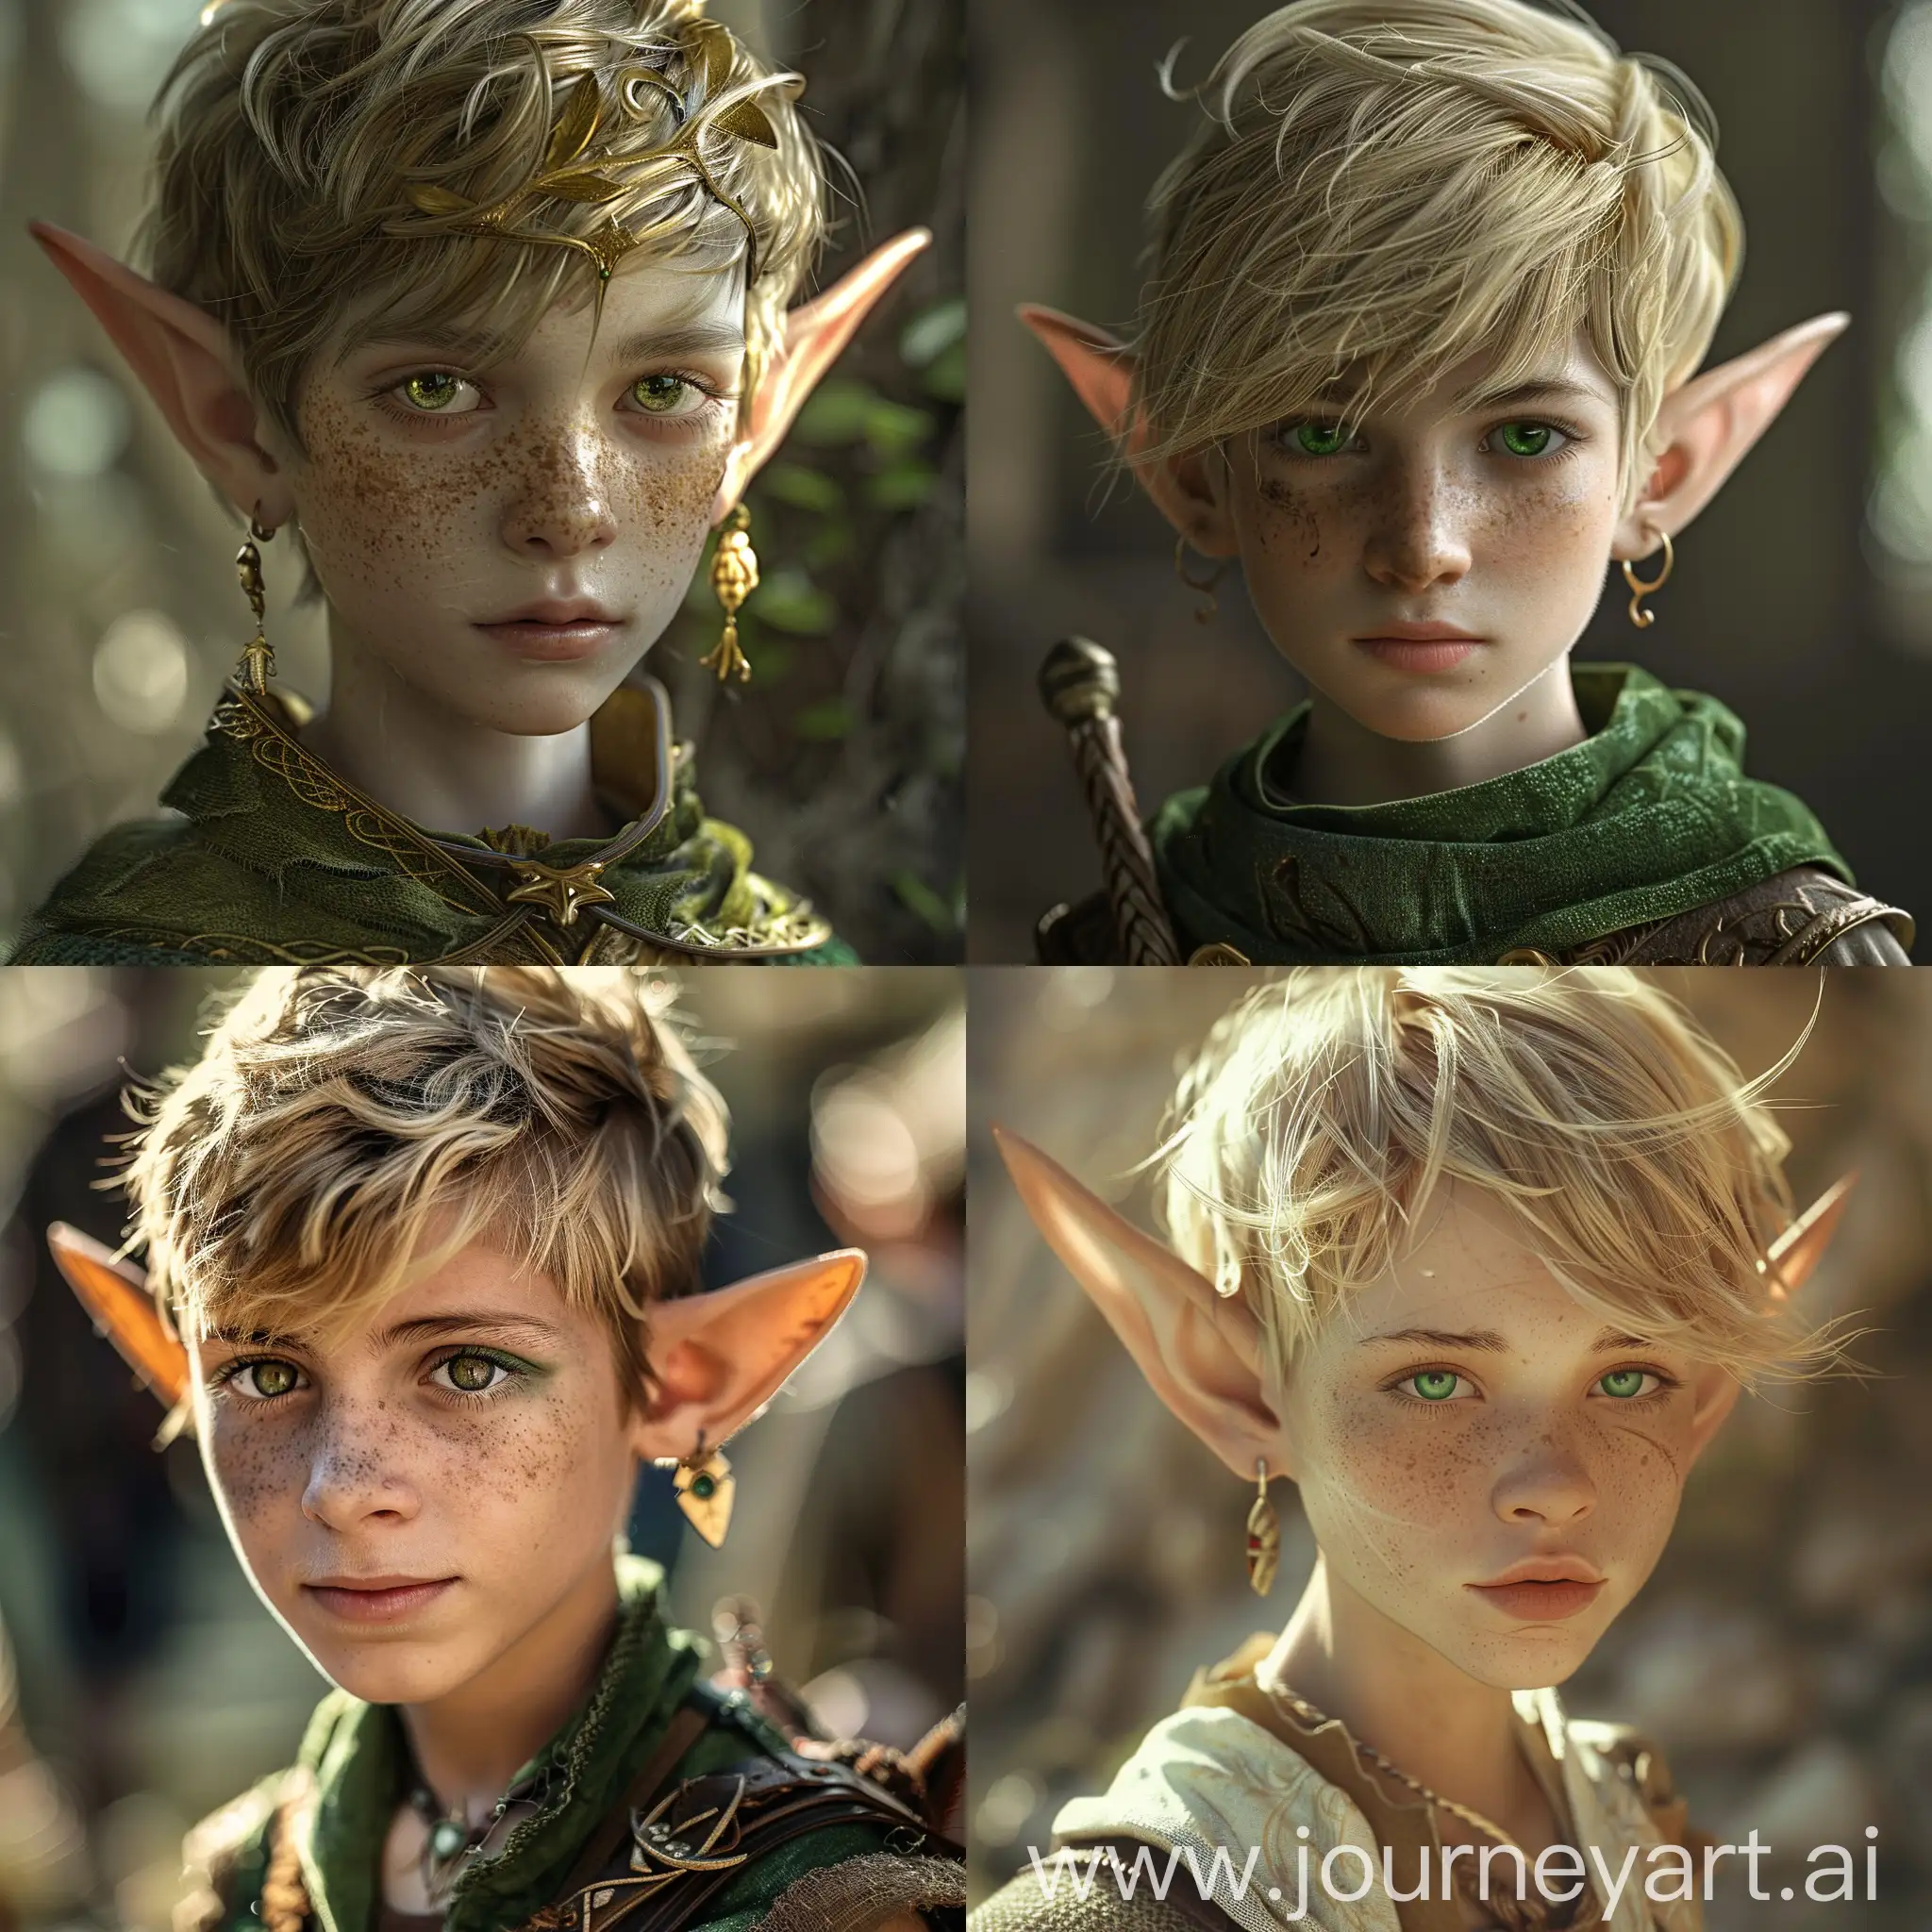 Adorable-Blond-Elf-Boy-with-Green-Eyes-in-Fantasy-Attire